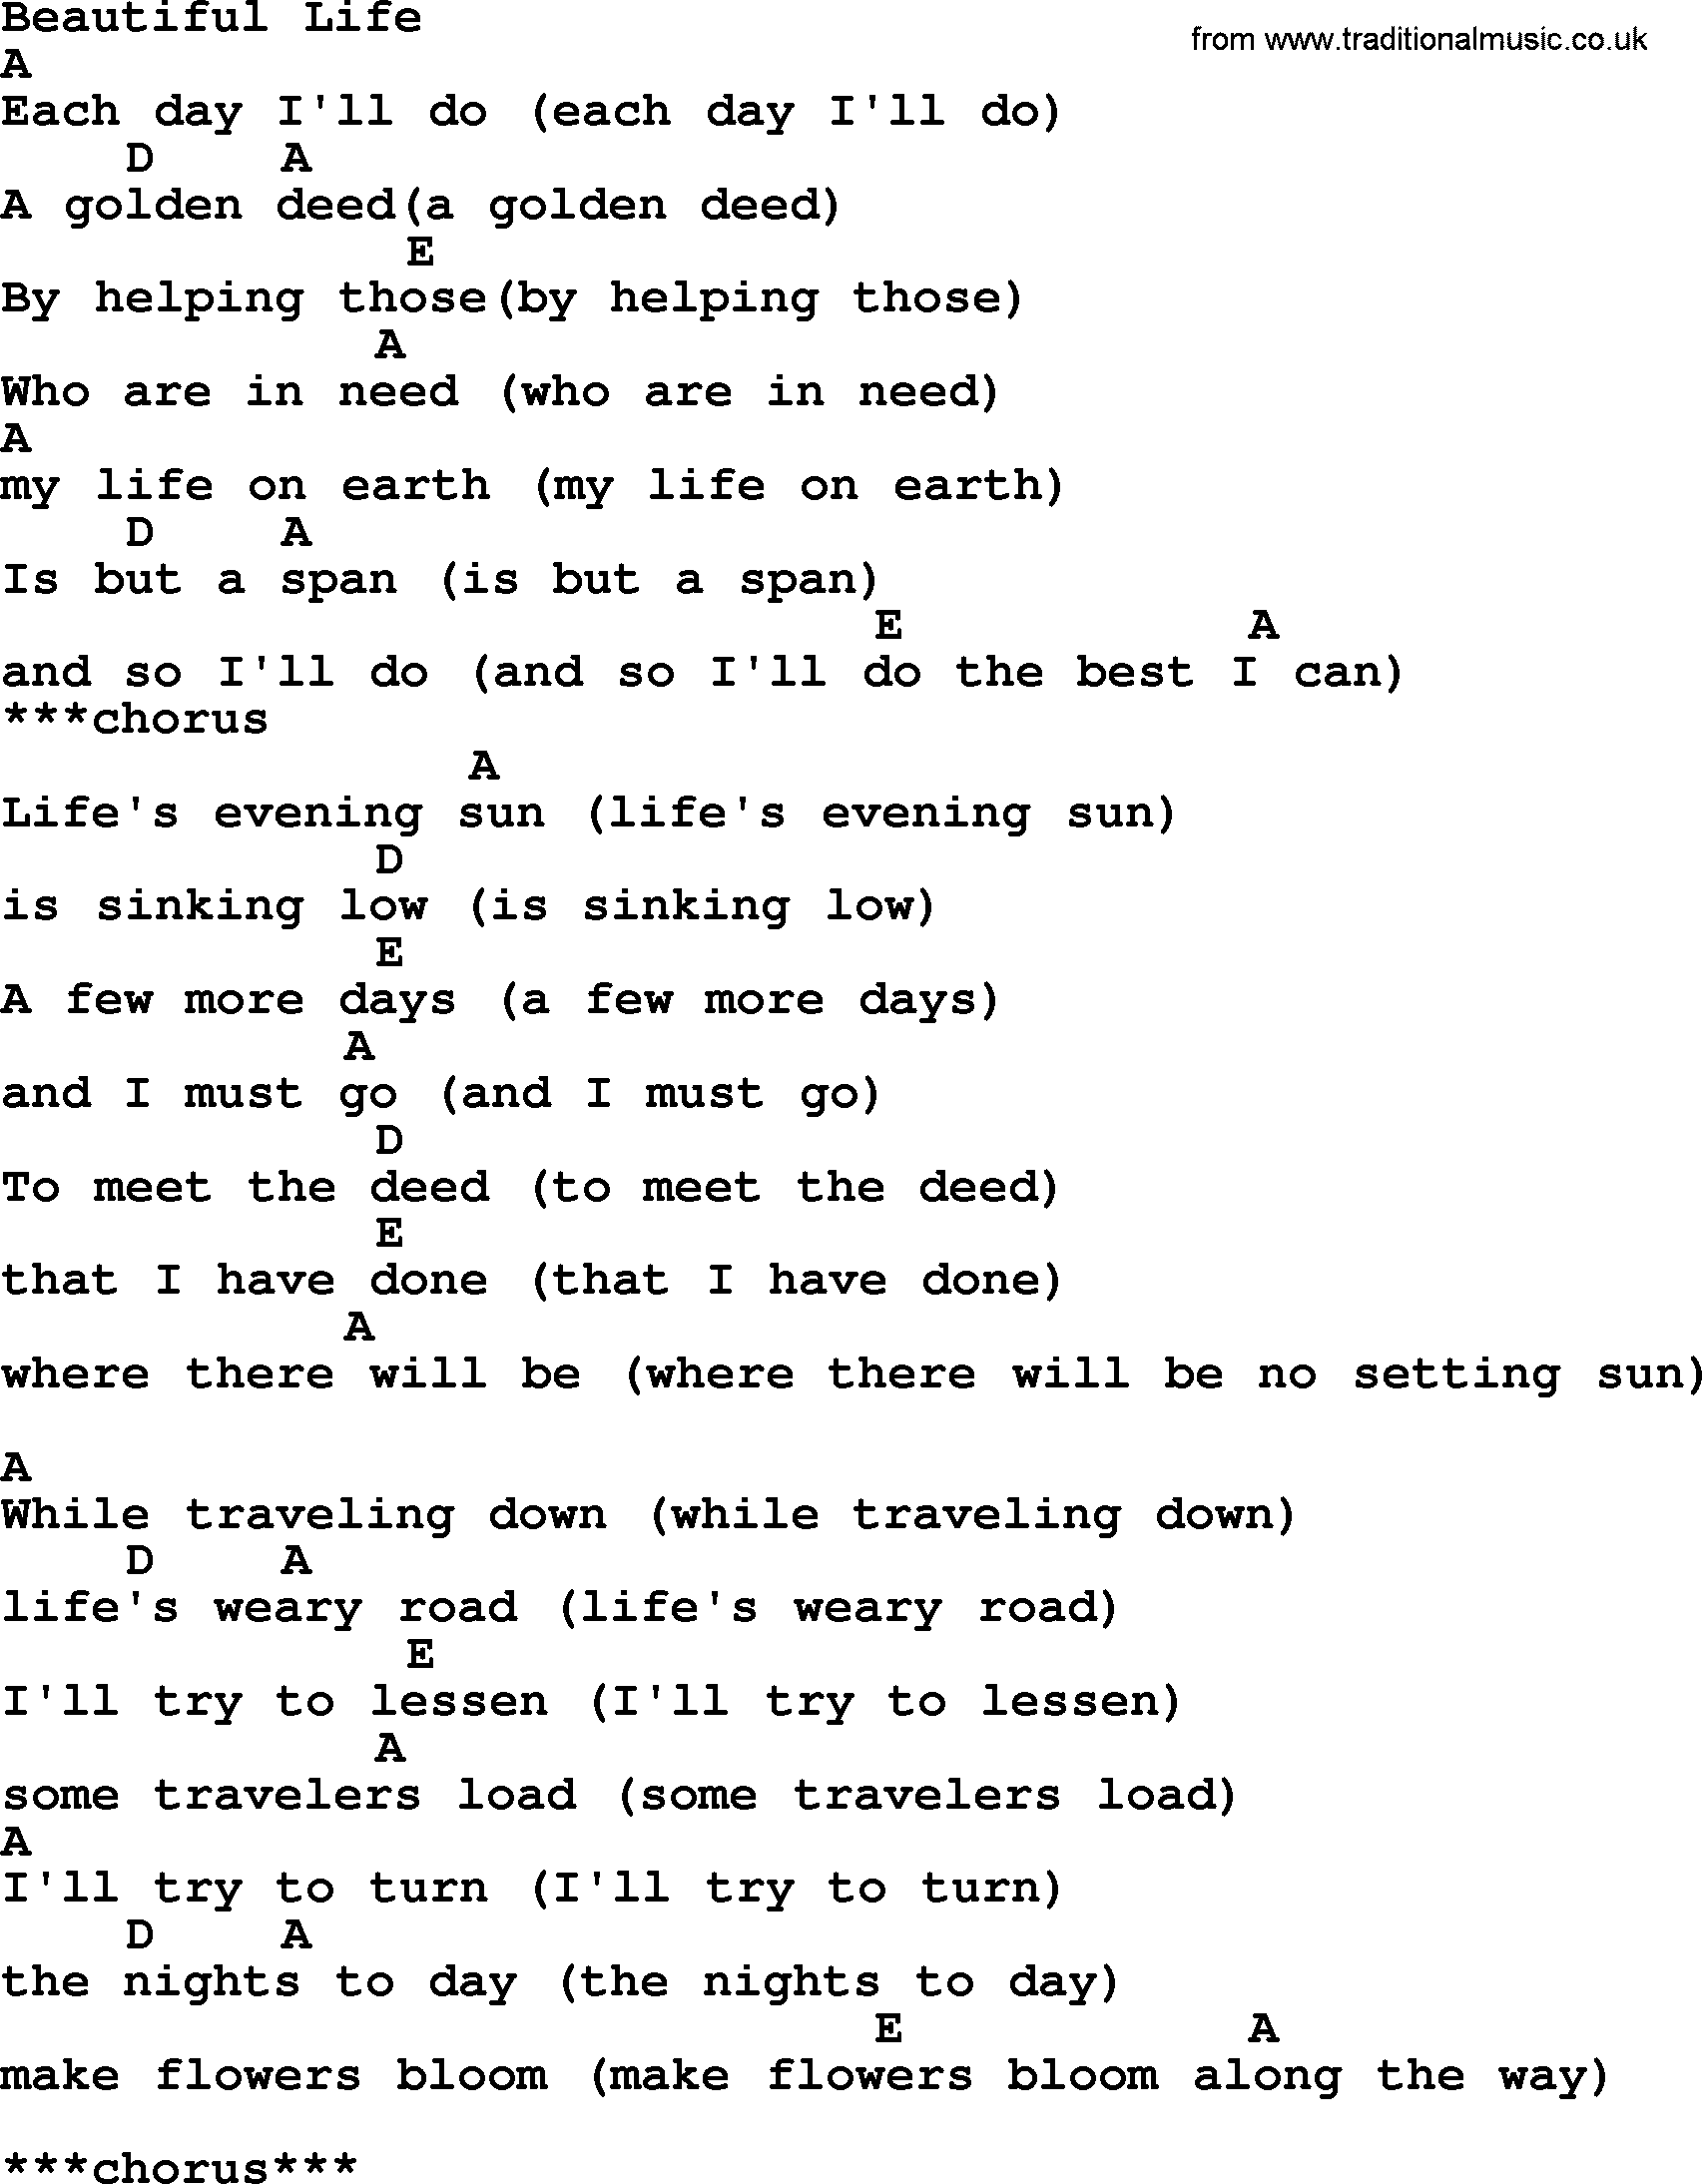 Beautiful Life Bluegrass Lyrics With Chords